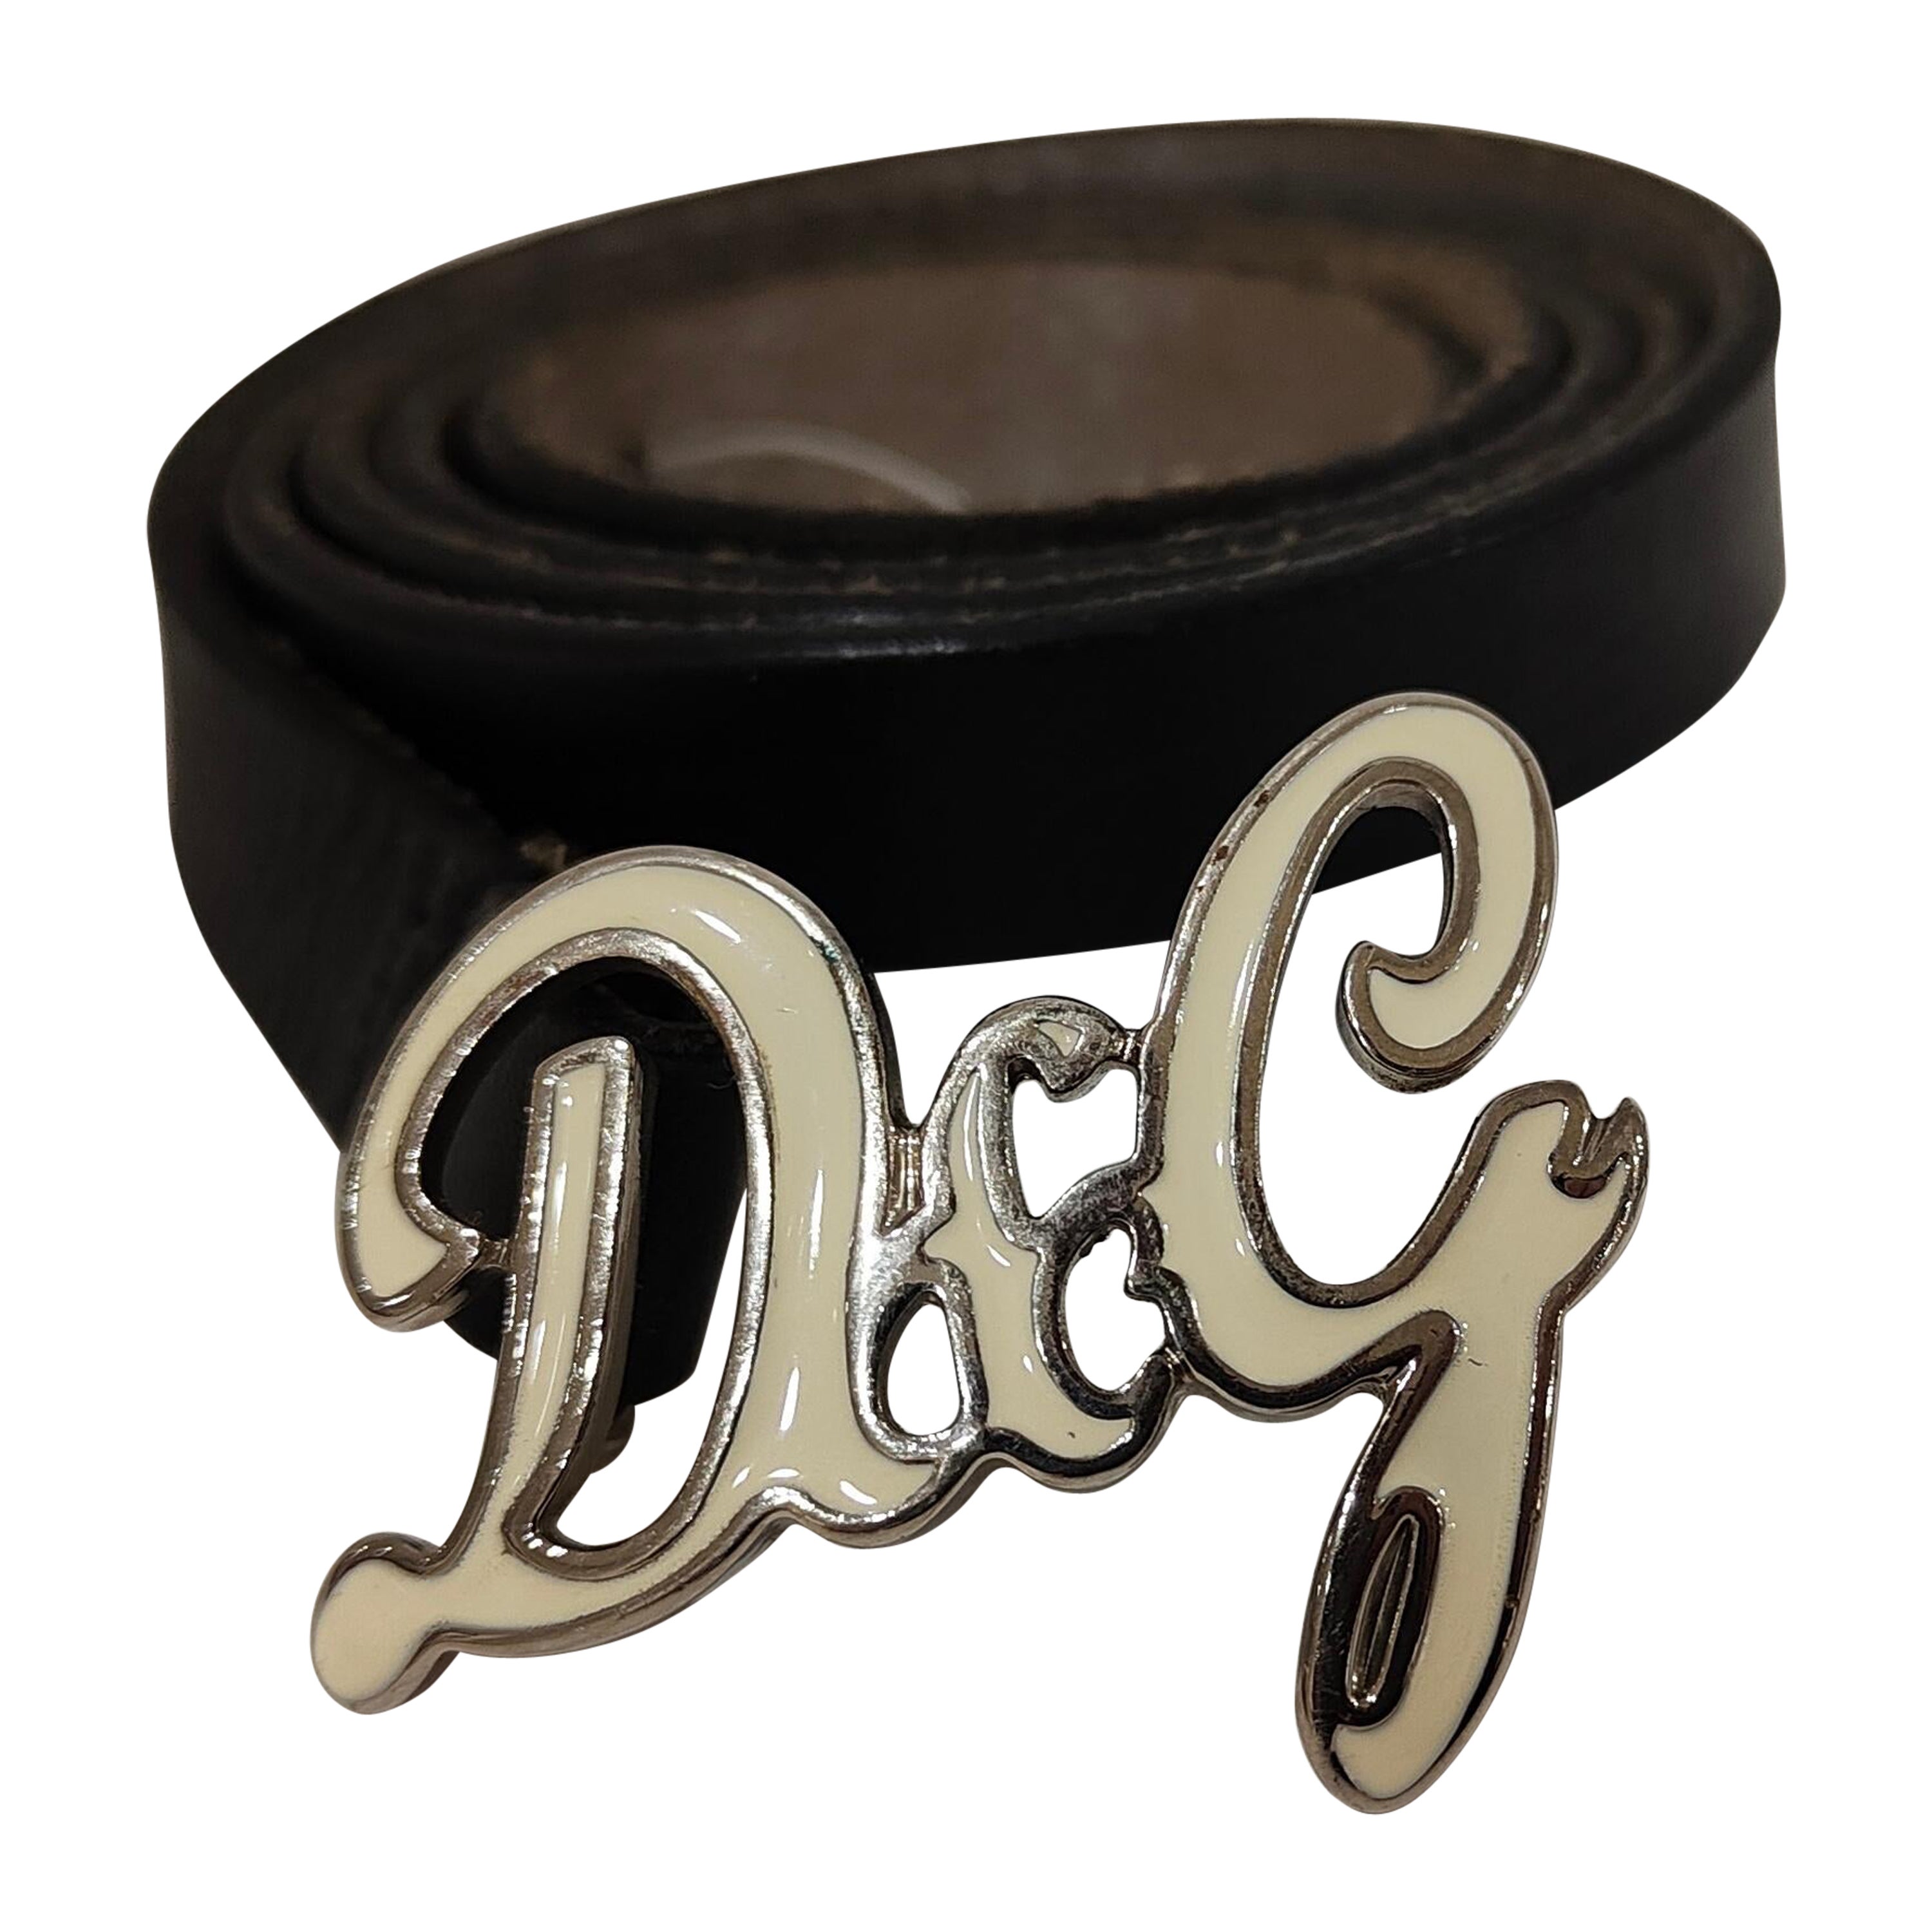 D&G by Dolce & Gabbana black leather belt 